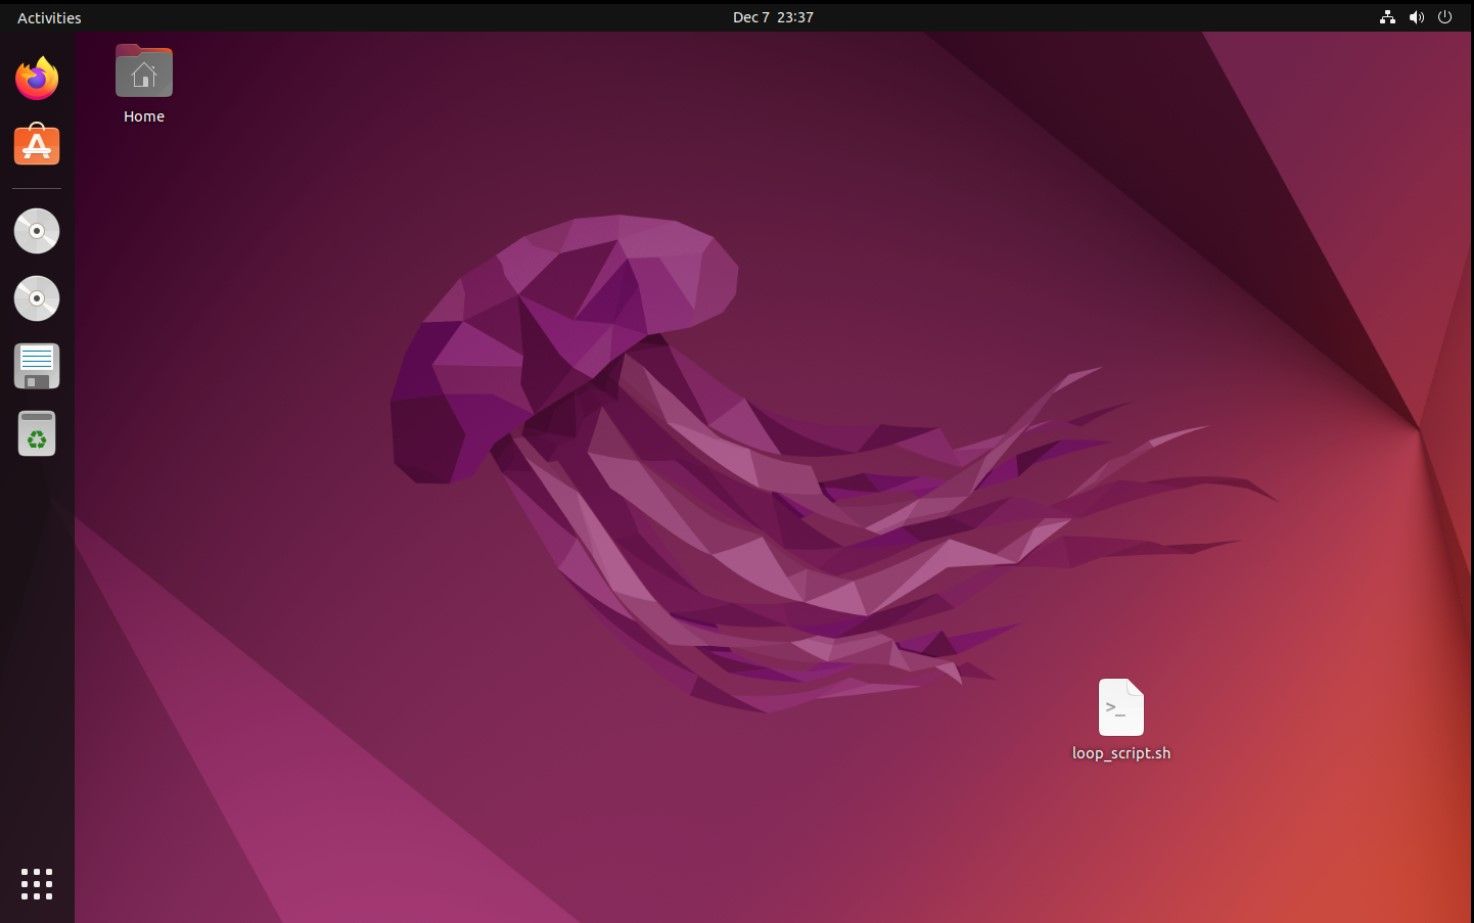 Ubuntu desktop with screen icon